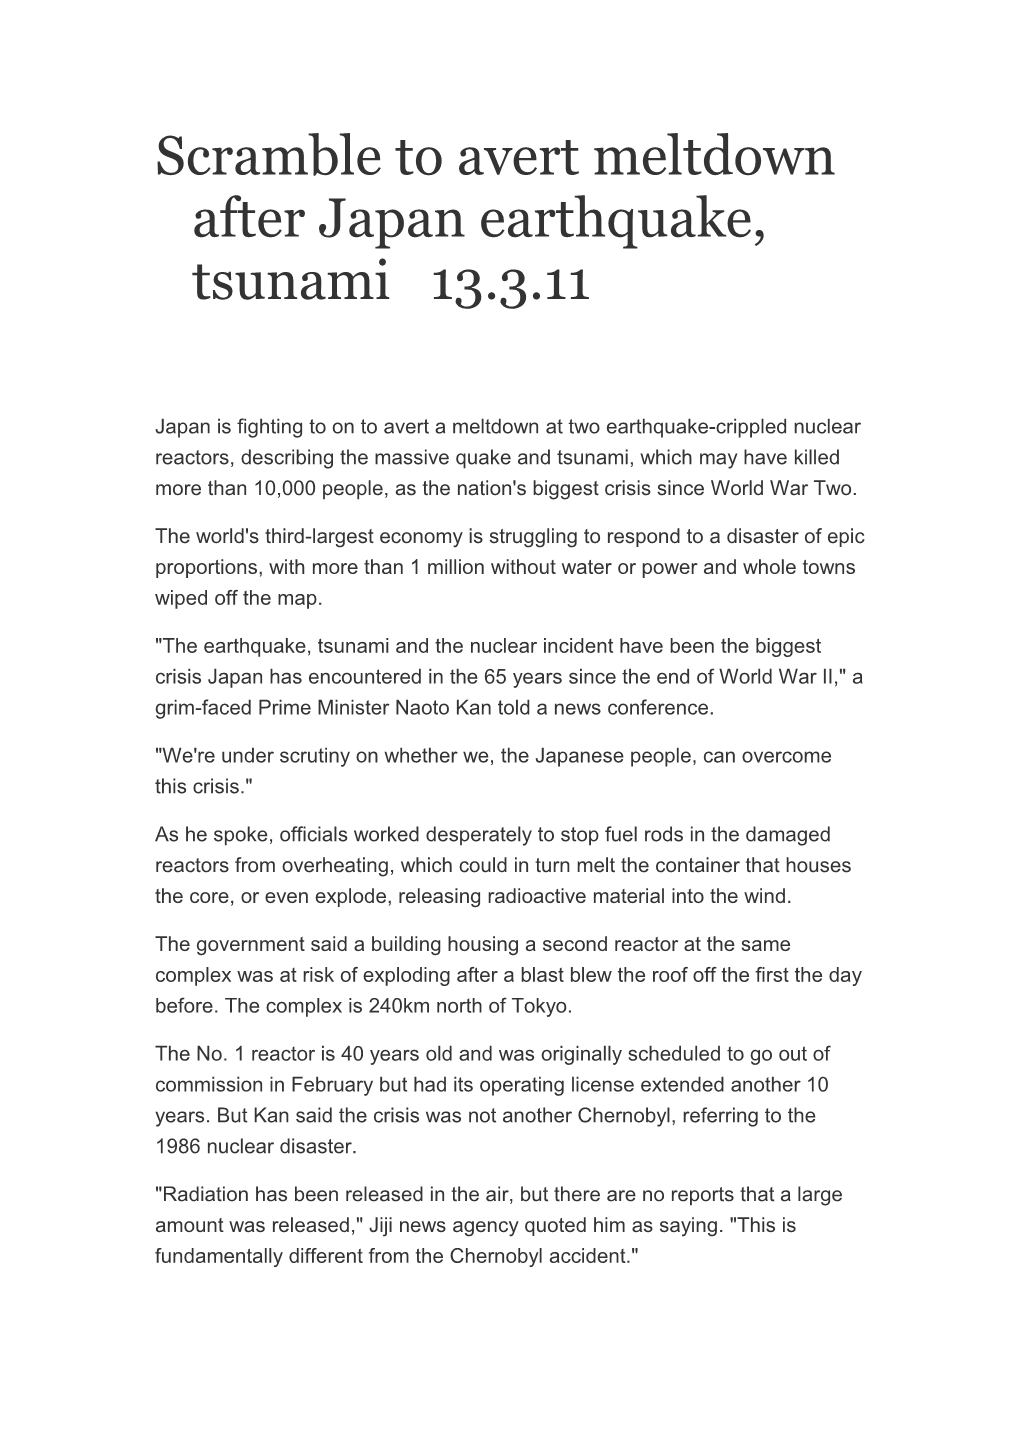 Scramble to Avert Meltdown After Japan Earthquake, Tsunami